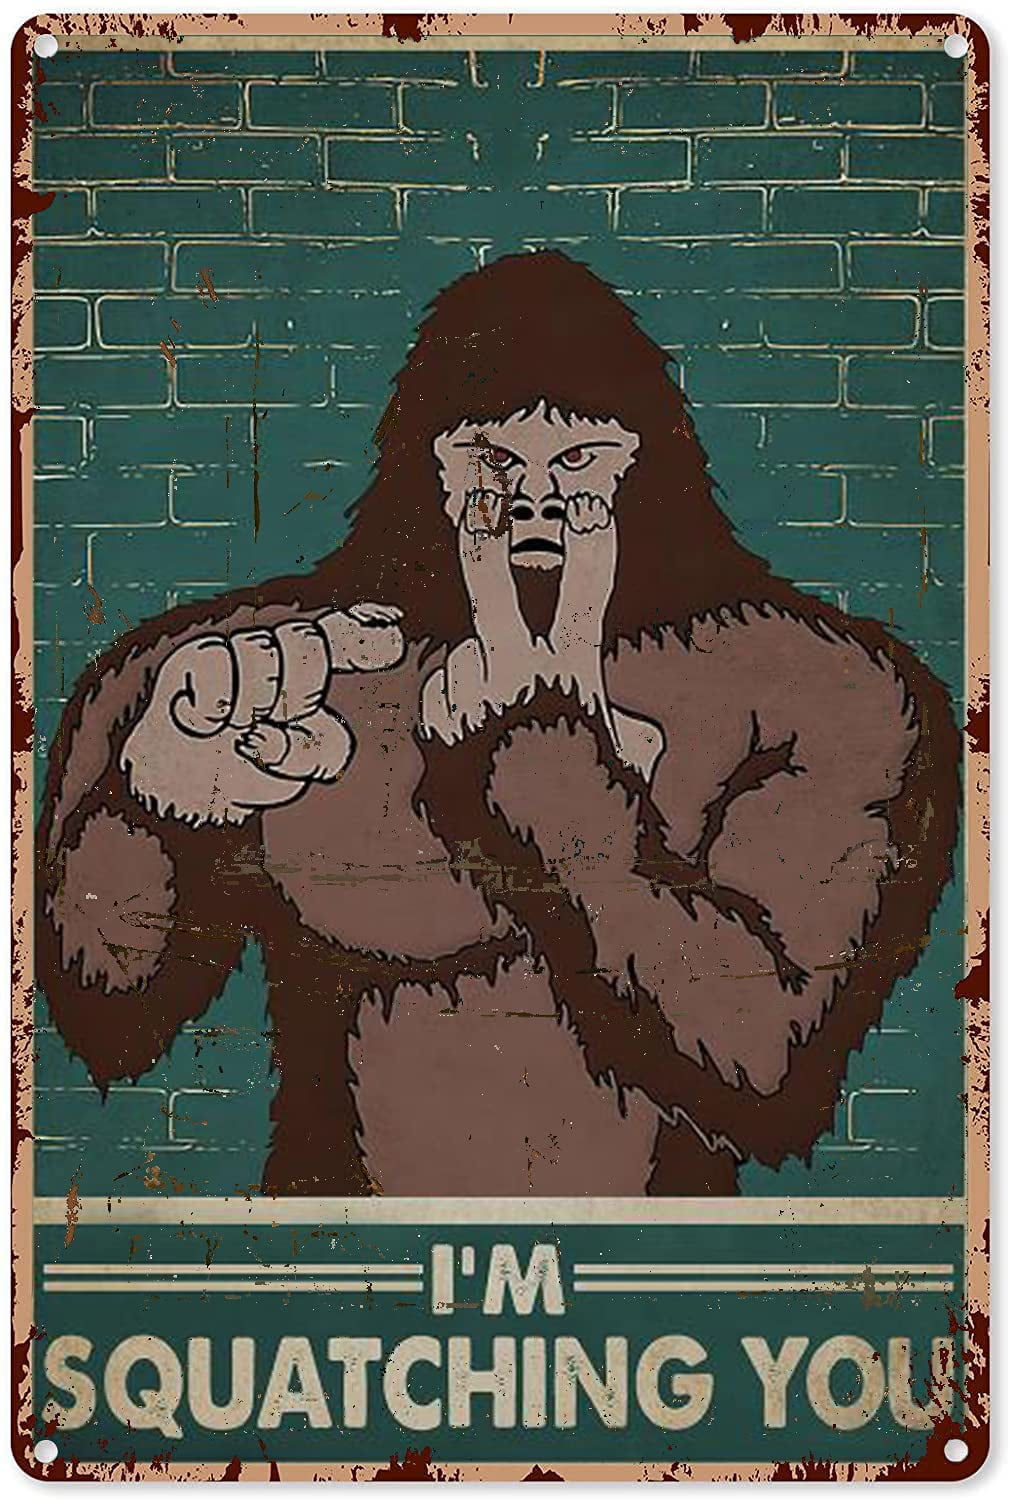 Bigfoot Bath Soap Co Wash Your Foots Wall Art Poster No Frame 